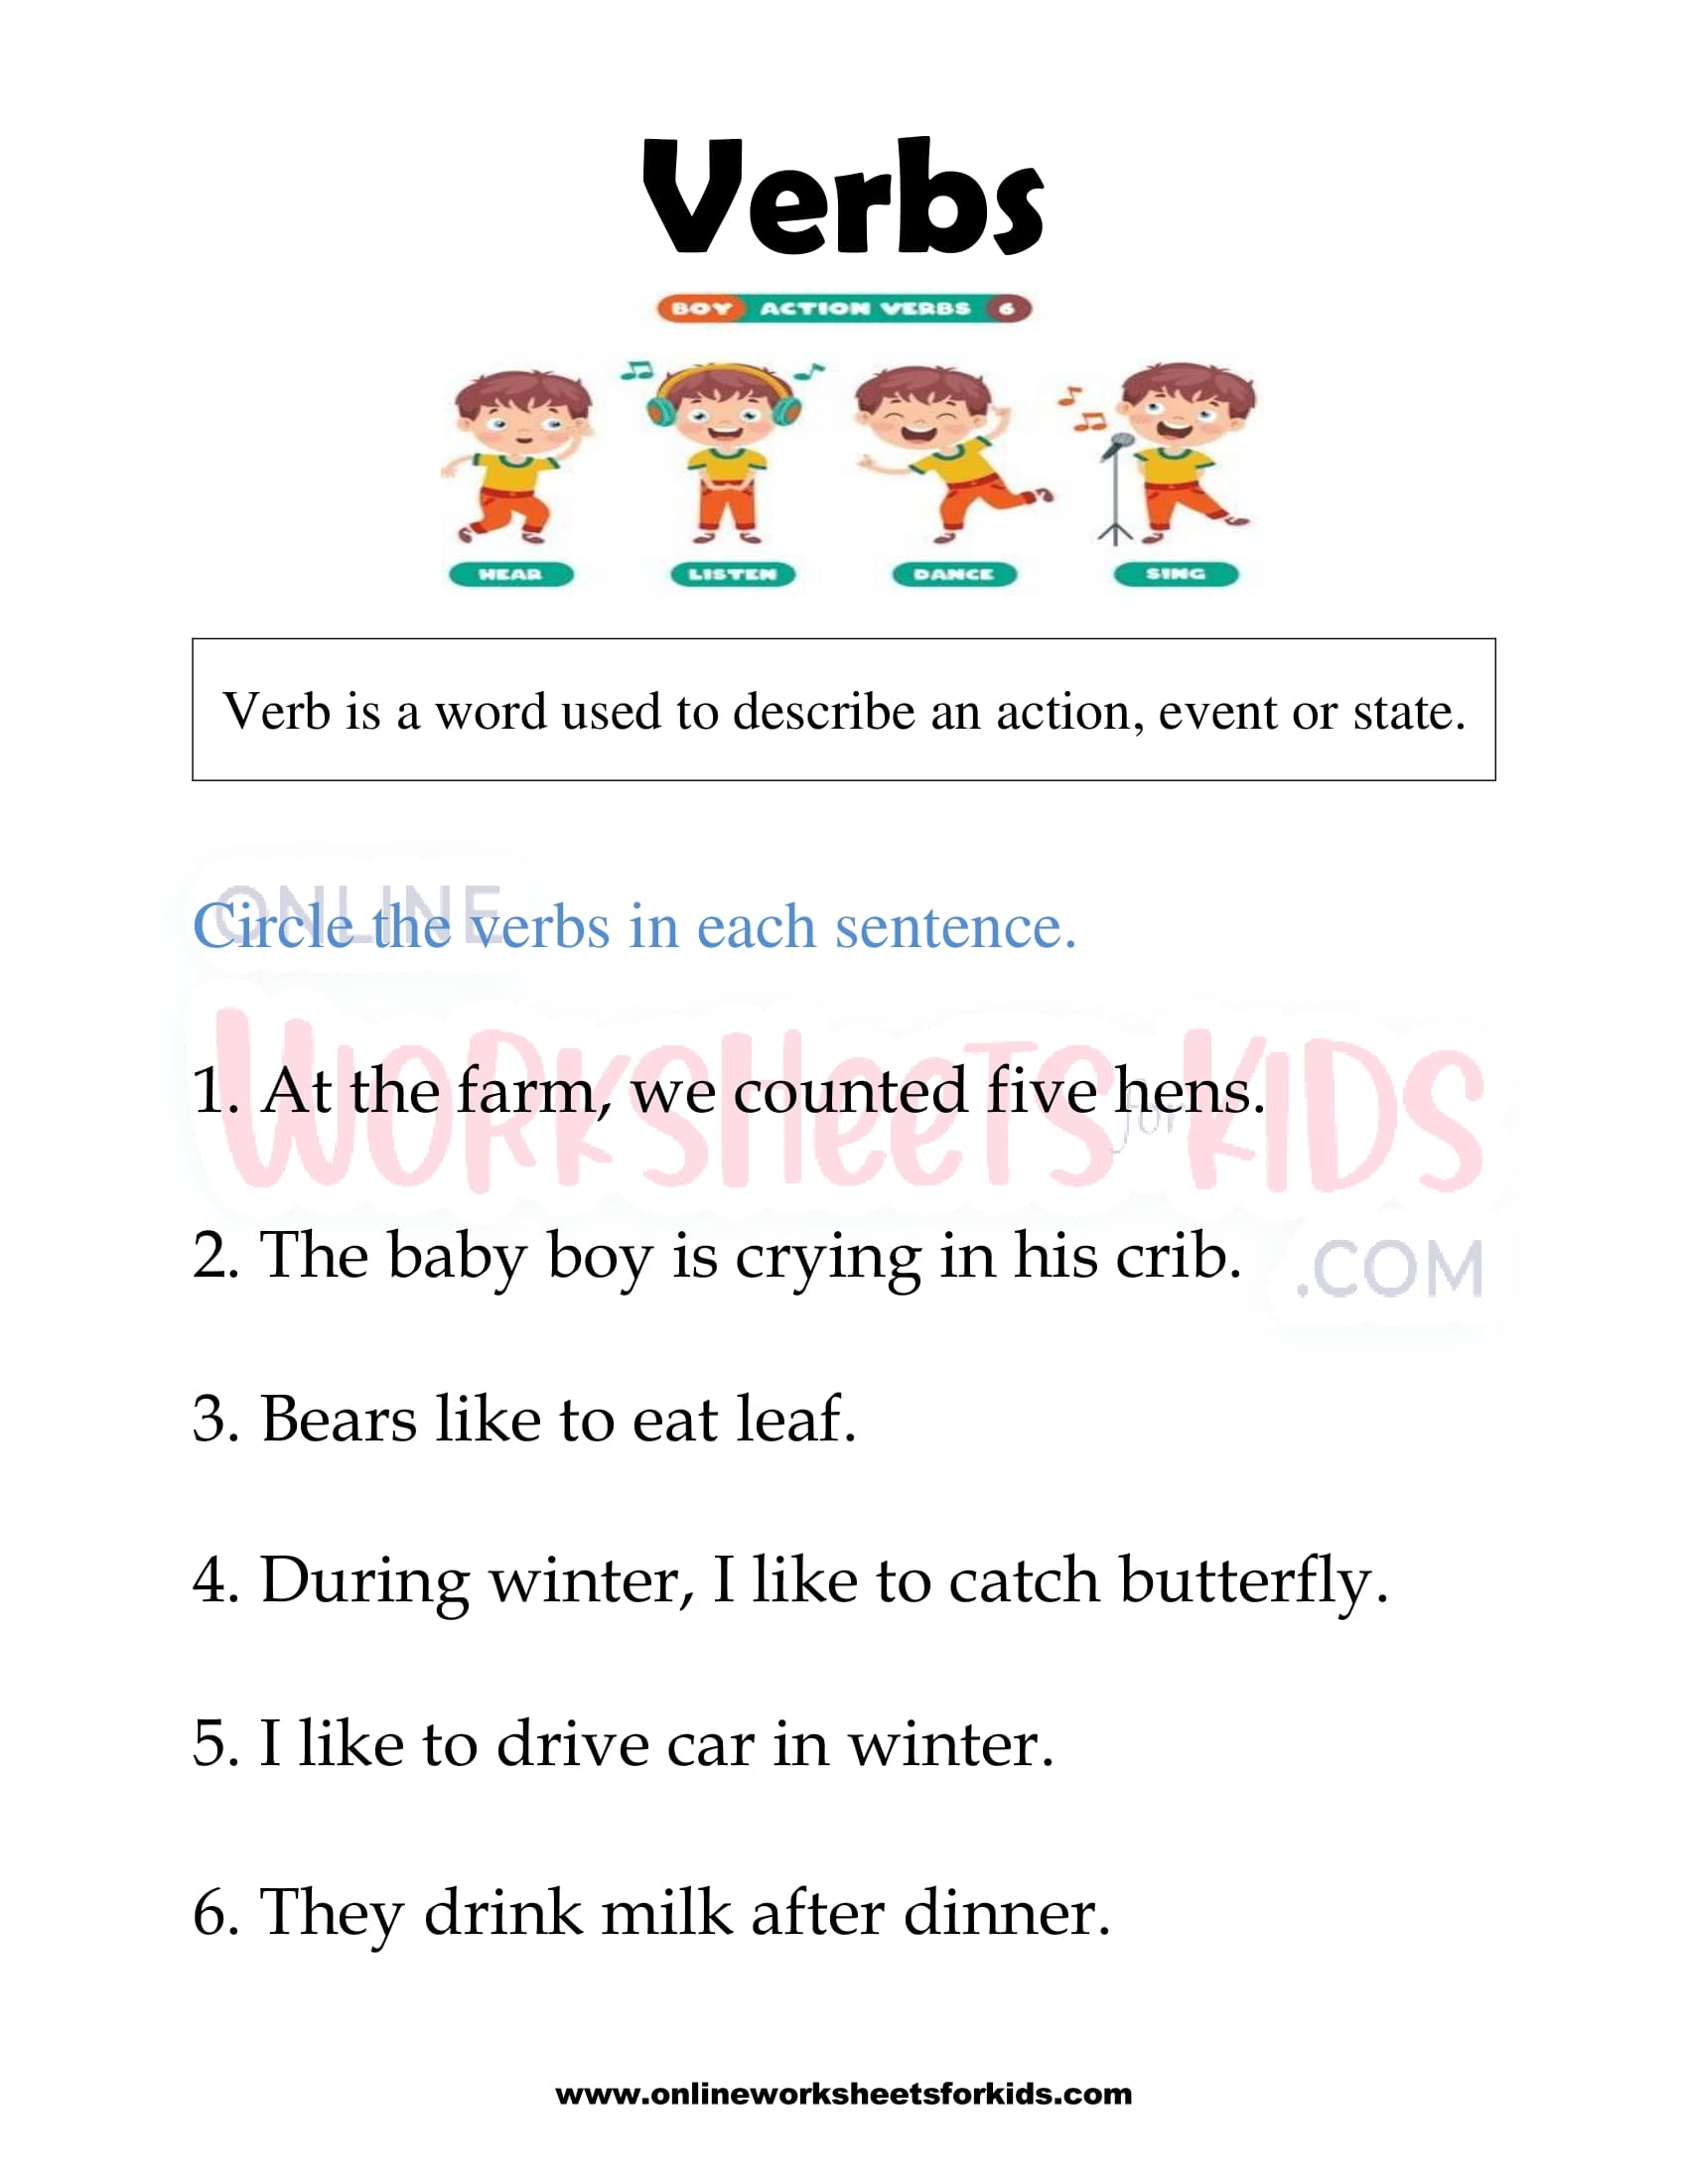 verbs-worksheets-for-grade-1-6